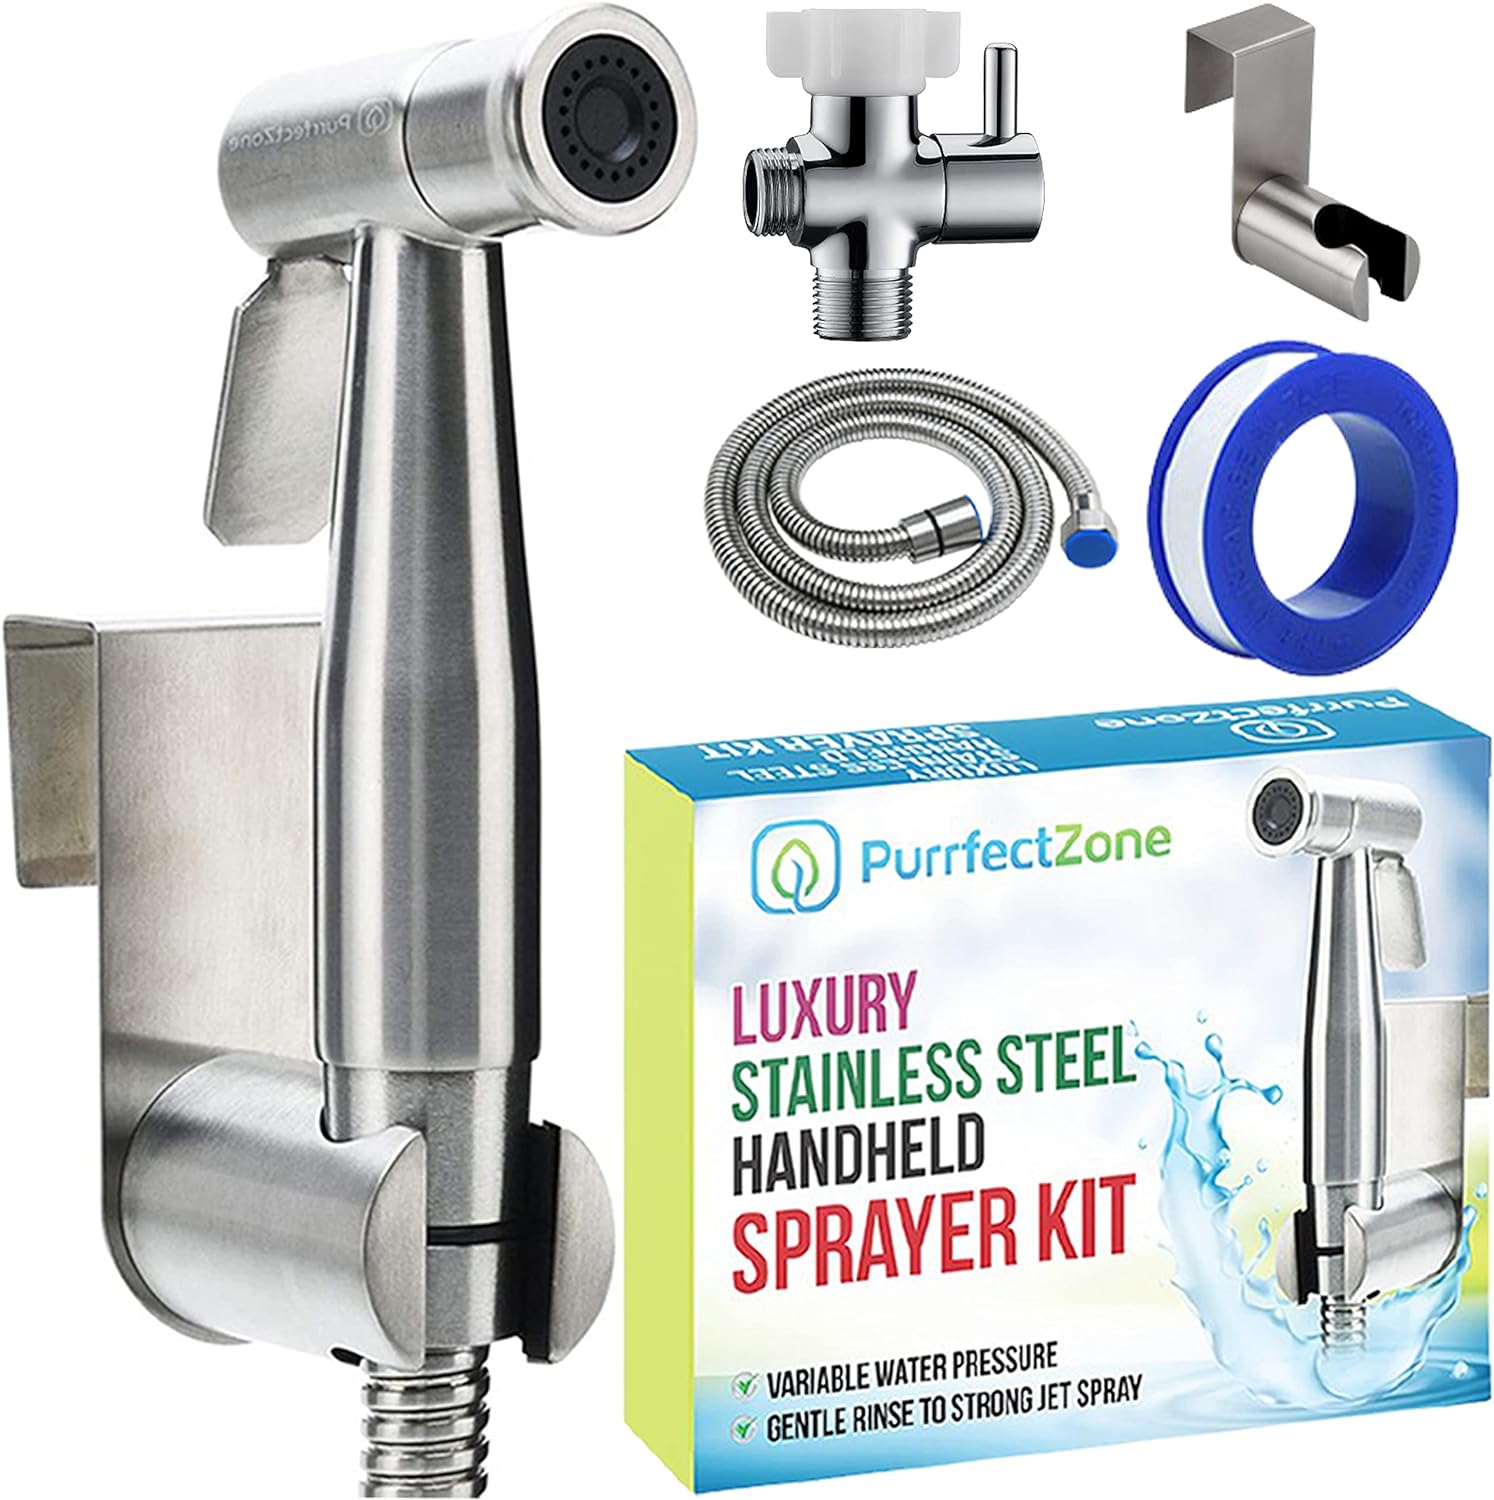 PurrfectZone Bidet Sprayer for Toilet, Handheld Sprayer Kit, Hand Held Bidet, Cloth Diaper Sprayer Set - Easy to Install